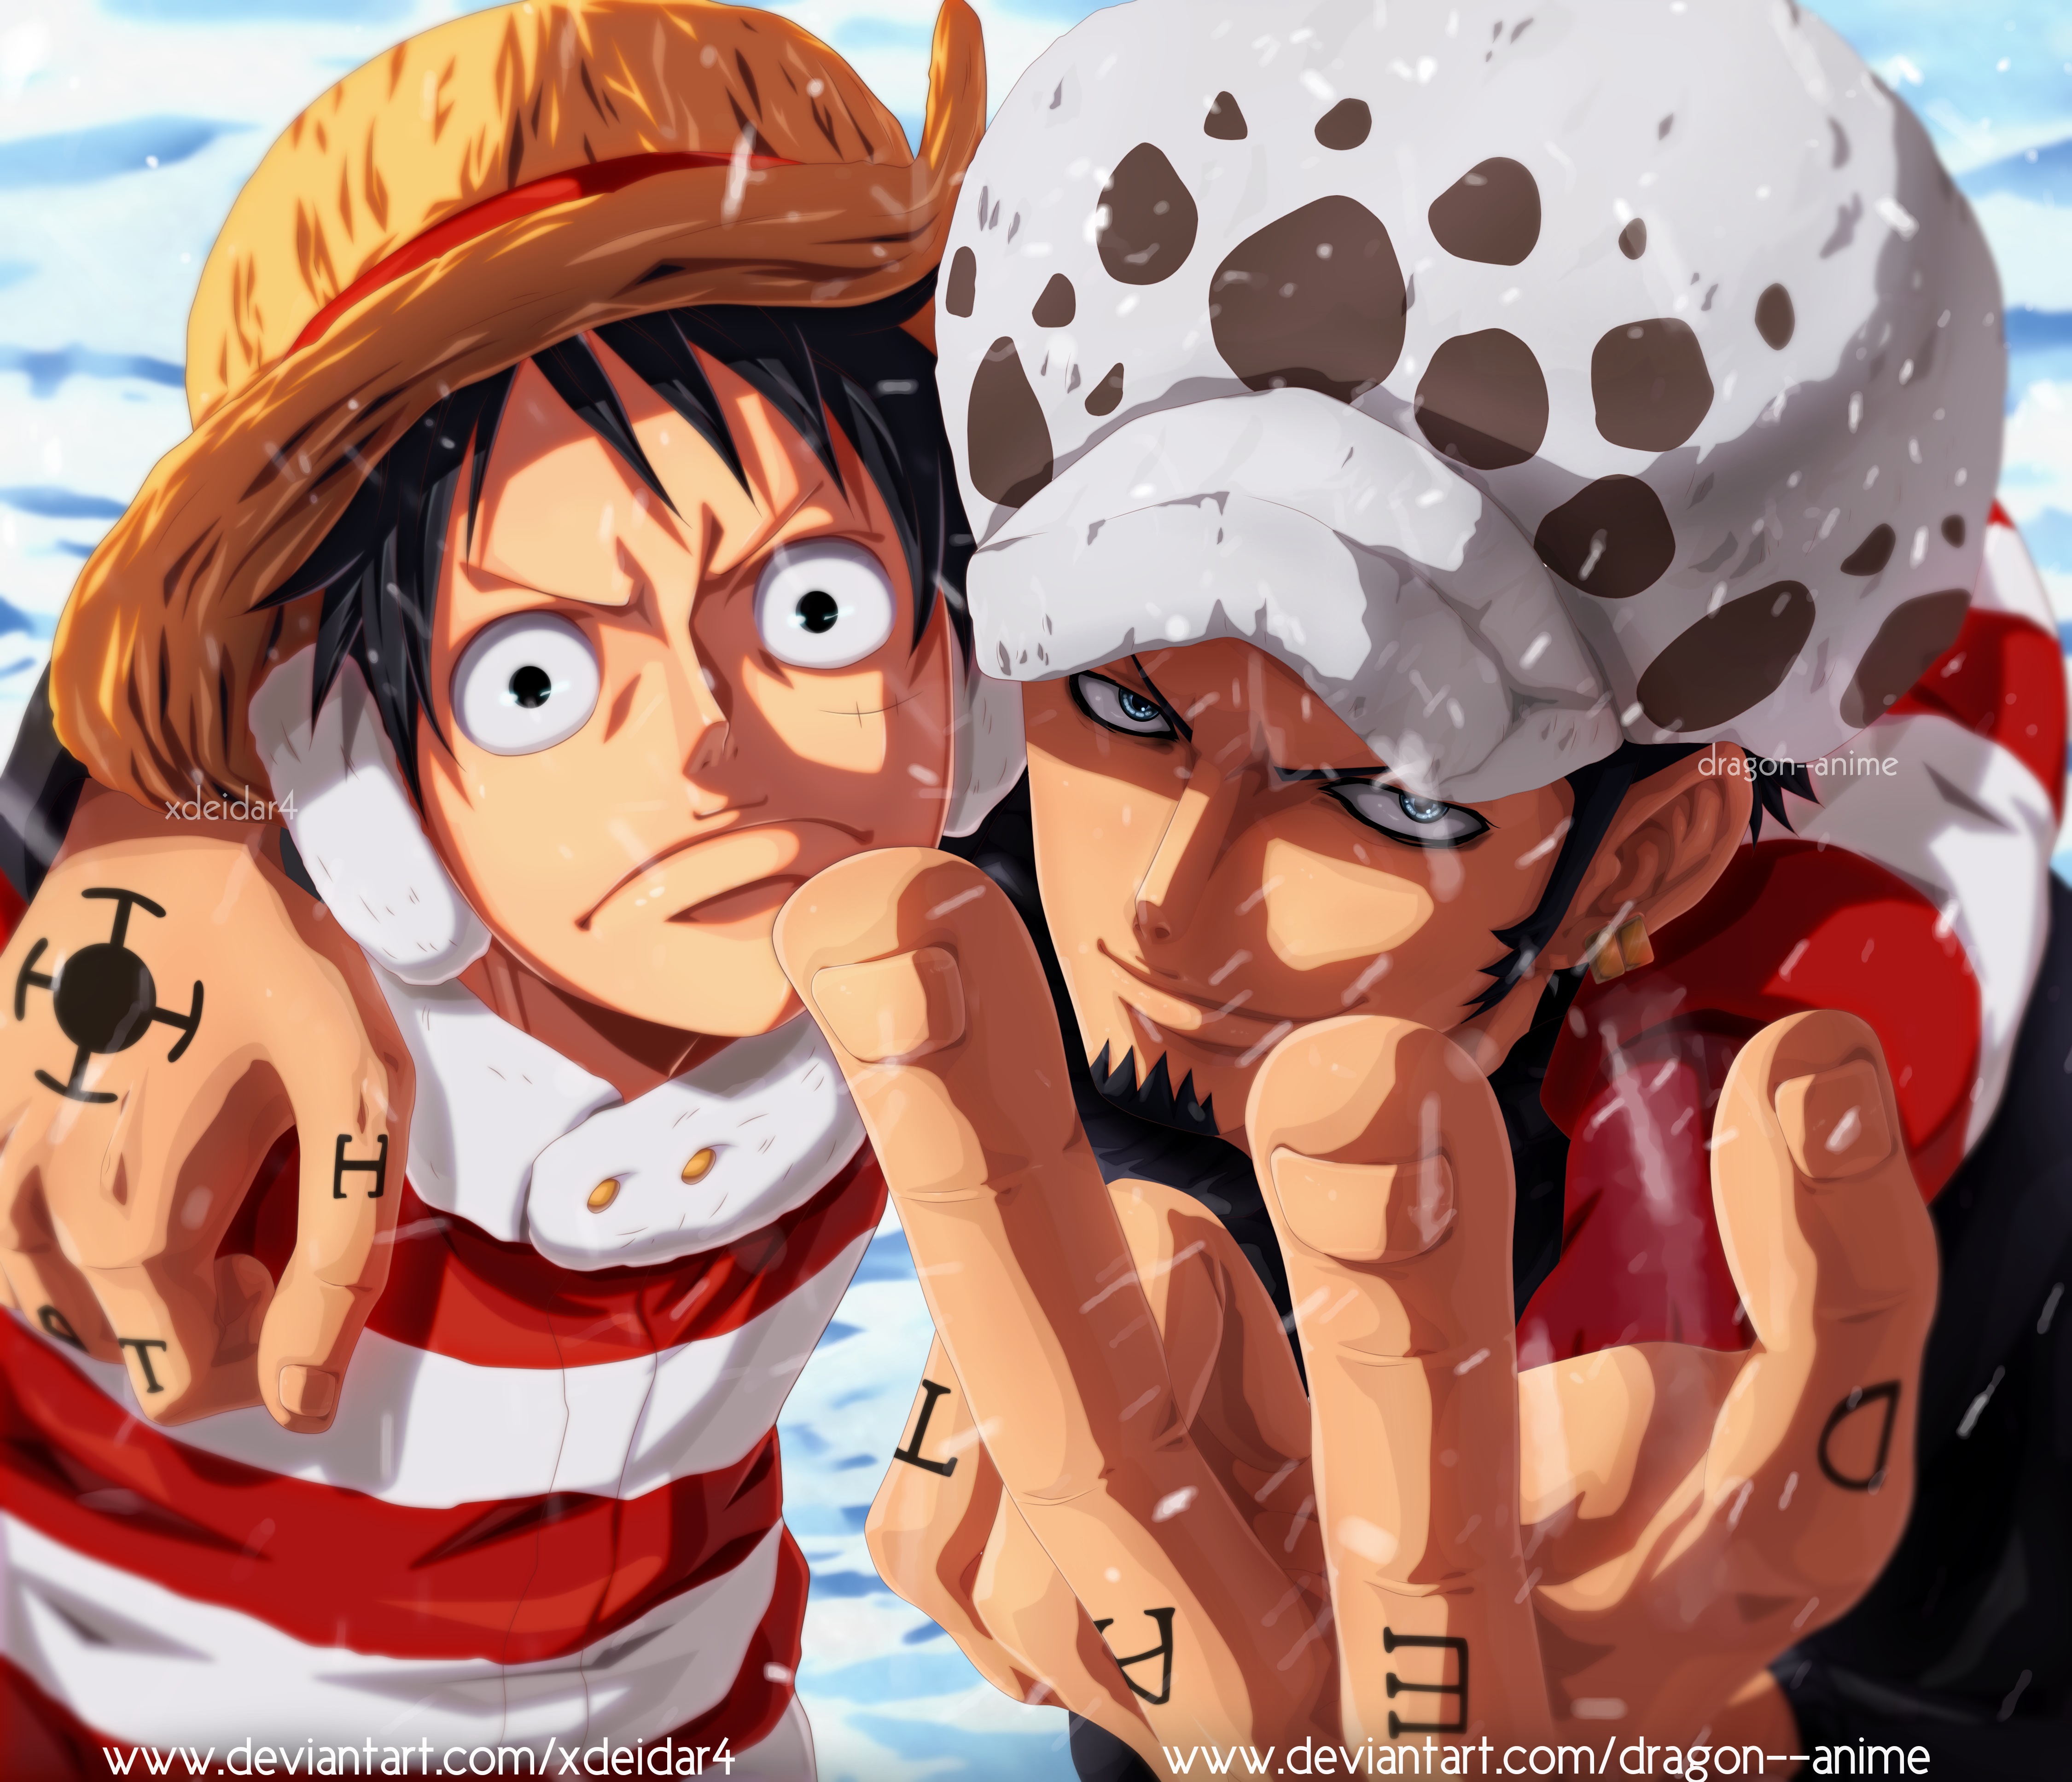 Anime One Piece 4k Ultra HD Wallpaper by Dragon--anime